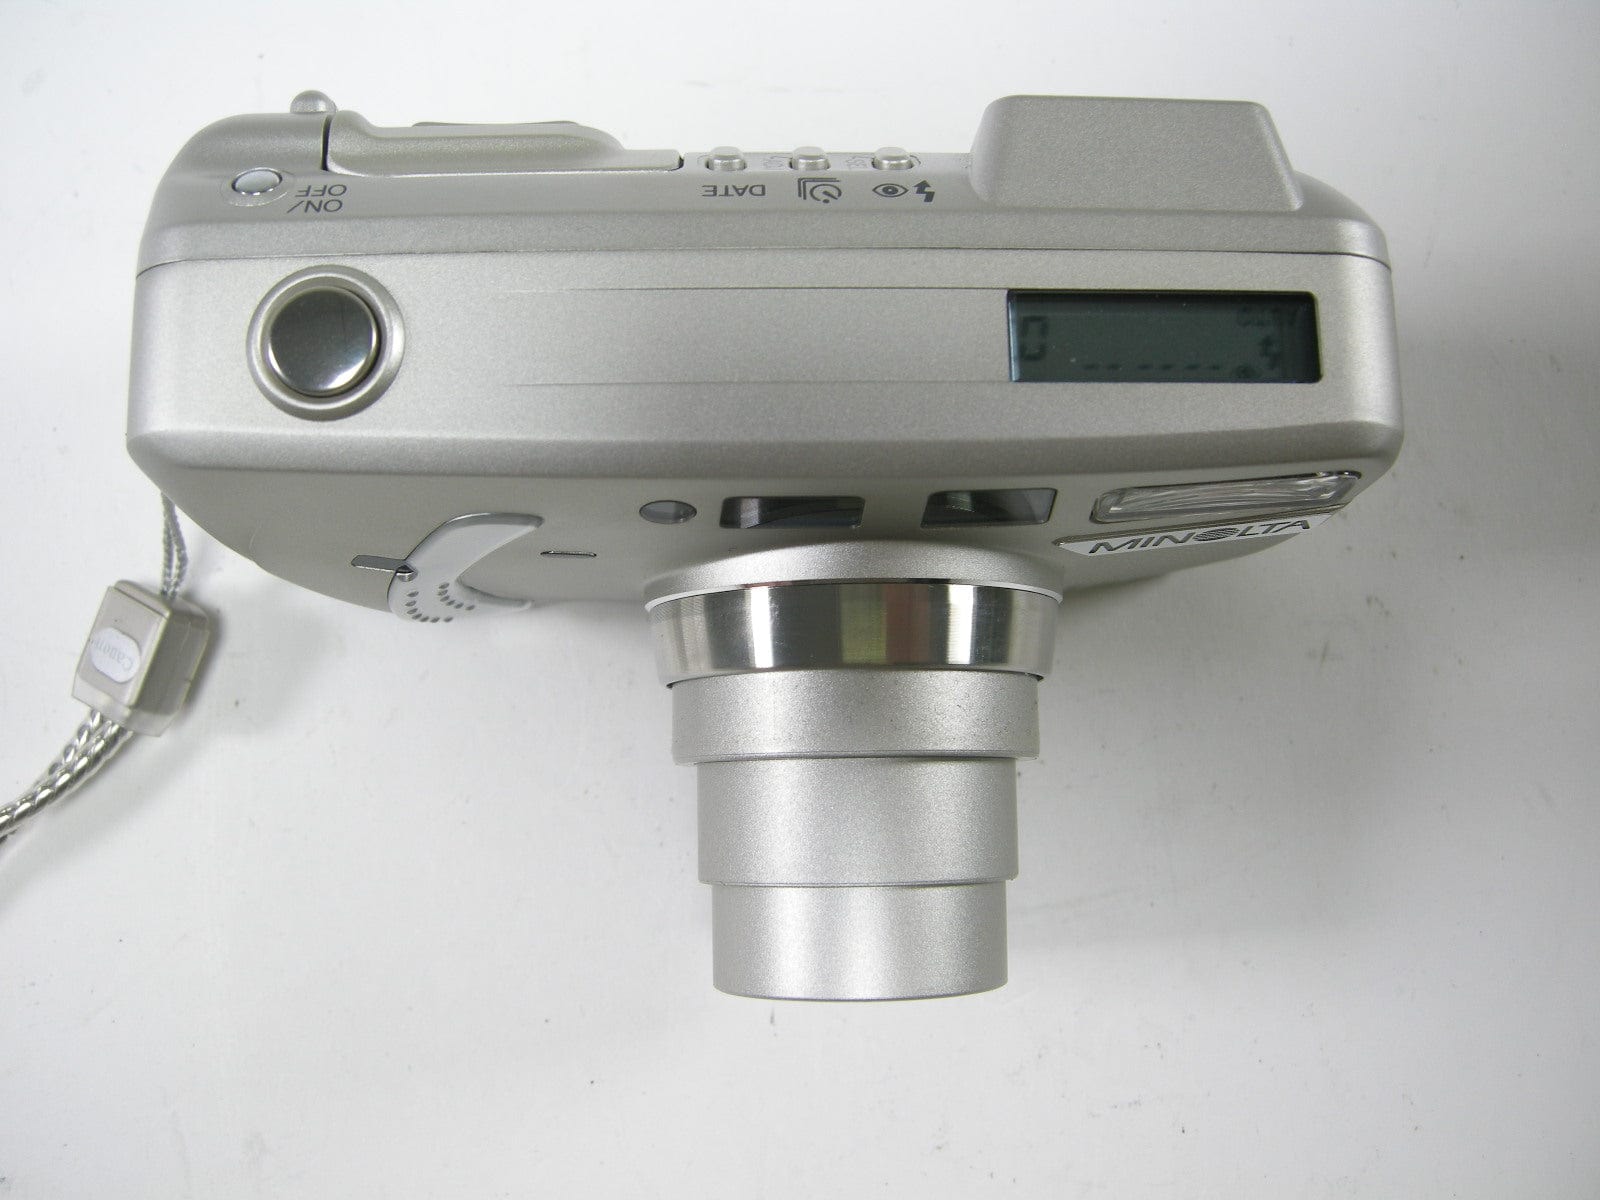 Minolta Zoom 160c 35mm camera